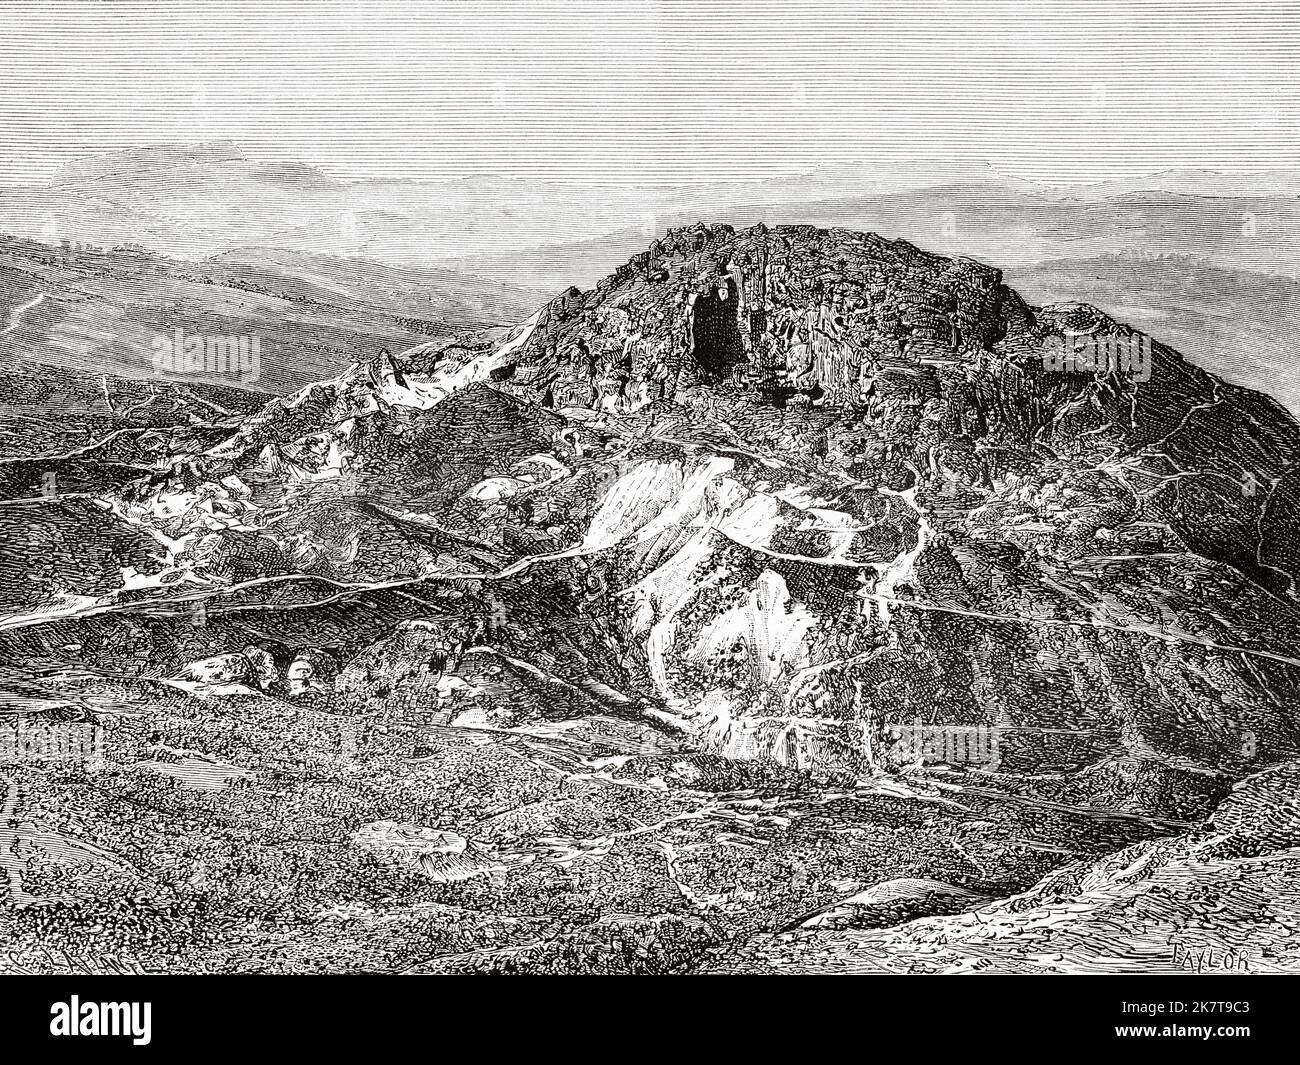 Csetatye goldmines, Romania. Europe. Travel to the mining regions of western Transylvania by Jacques Elisee Reclus, 1873 Stock Photo